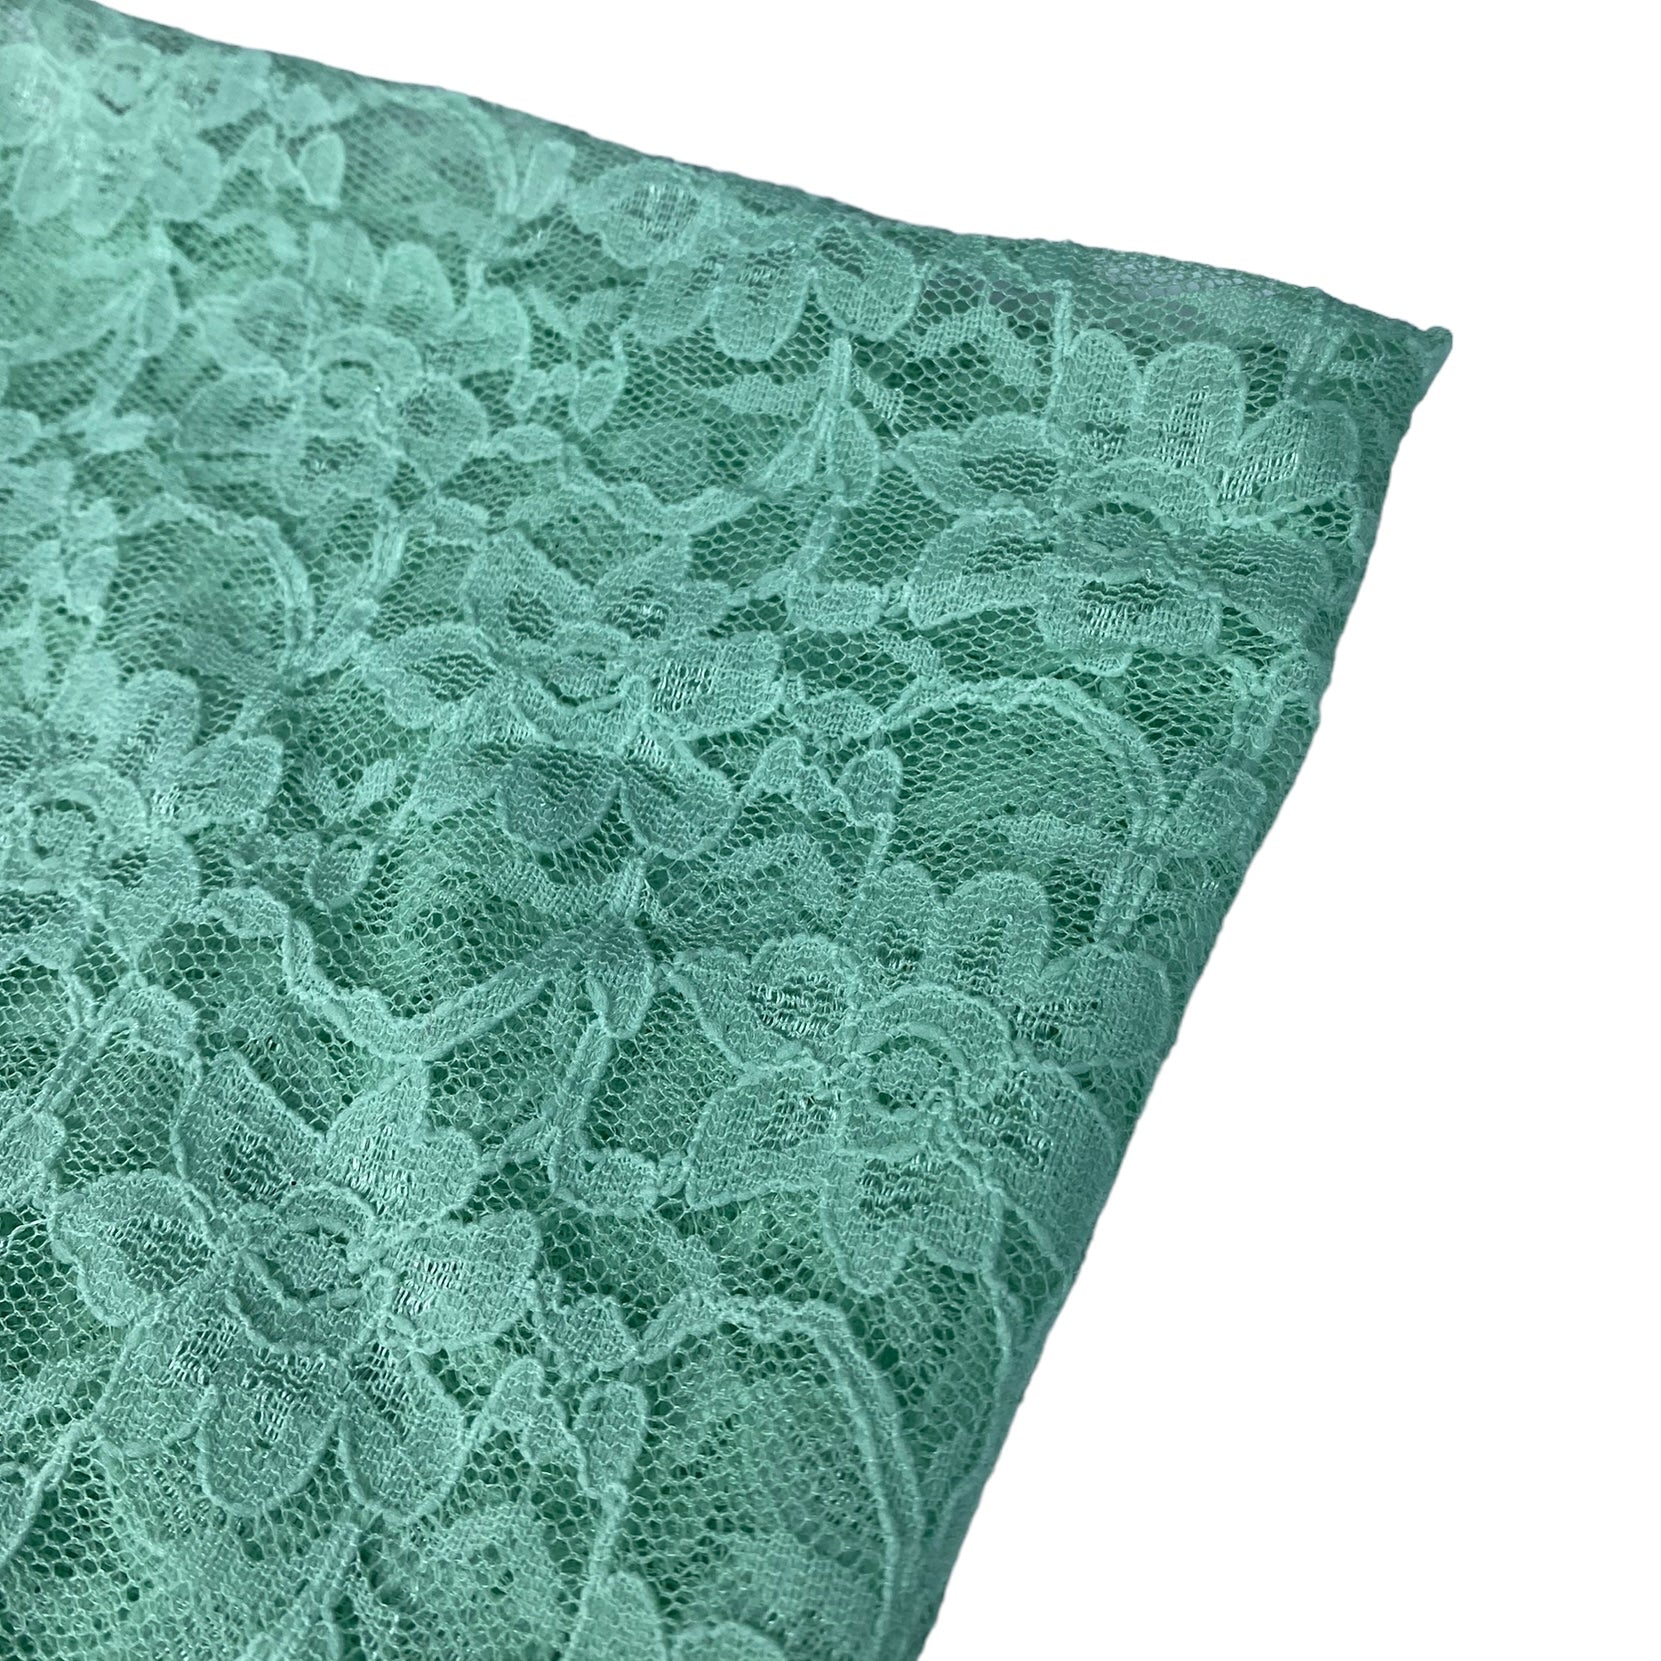 Floral Corded Lace - Mint